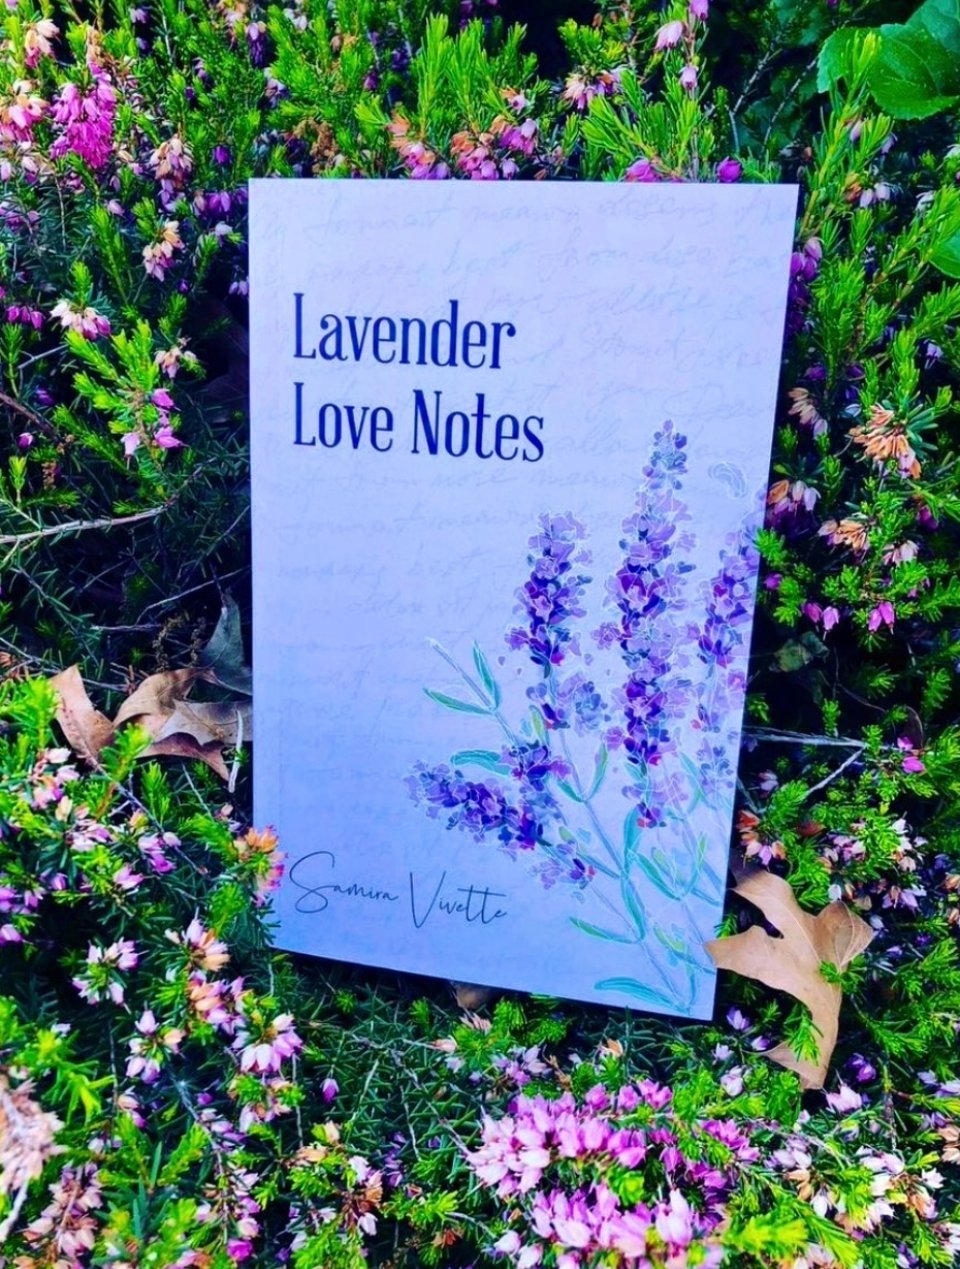 "Lavender Love Notes" Signed Copy